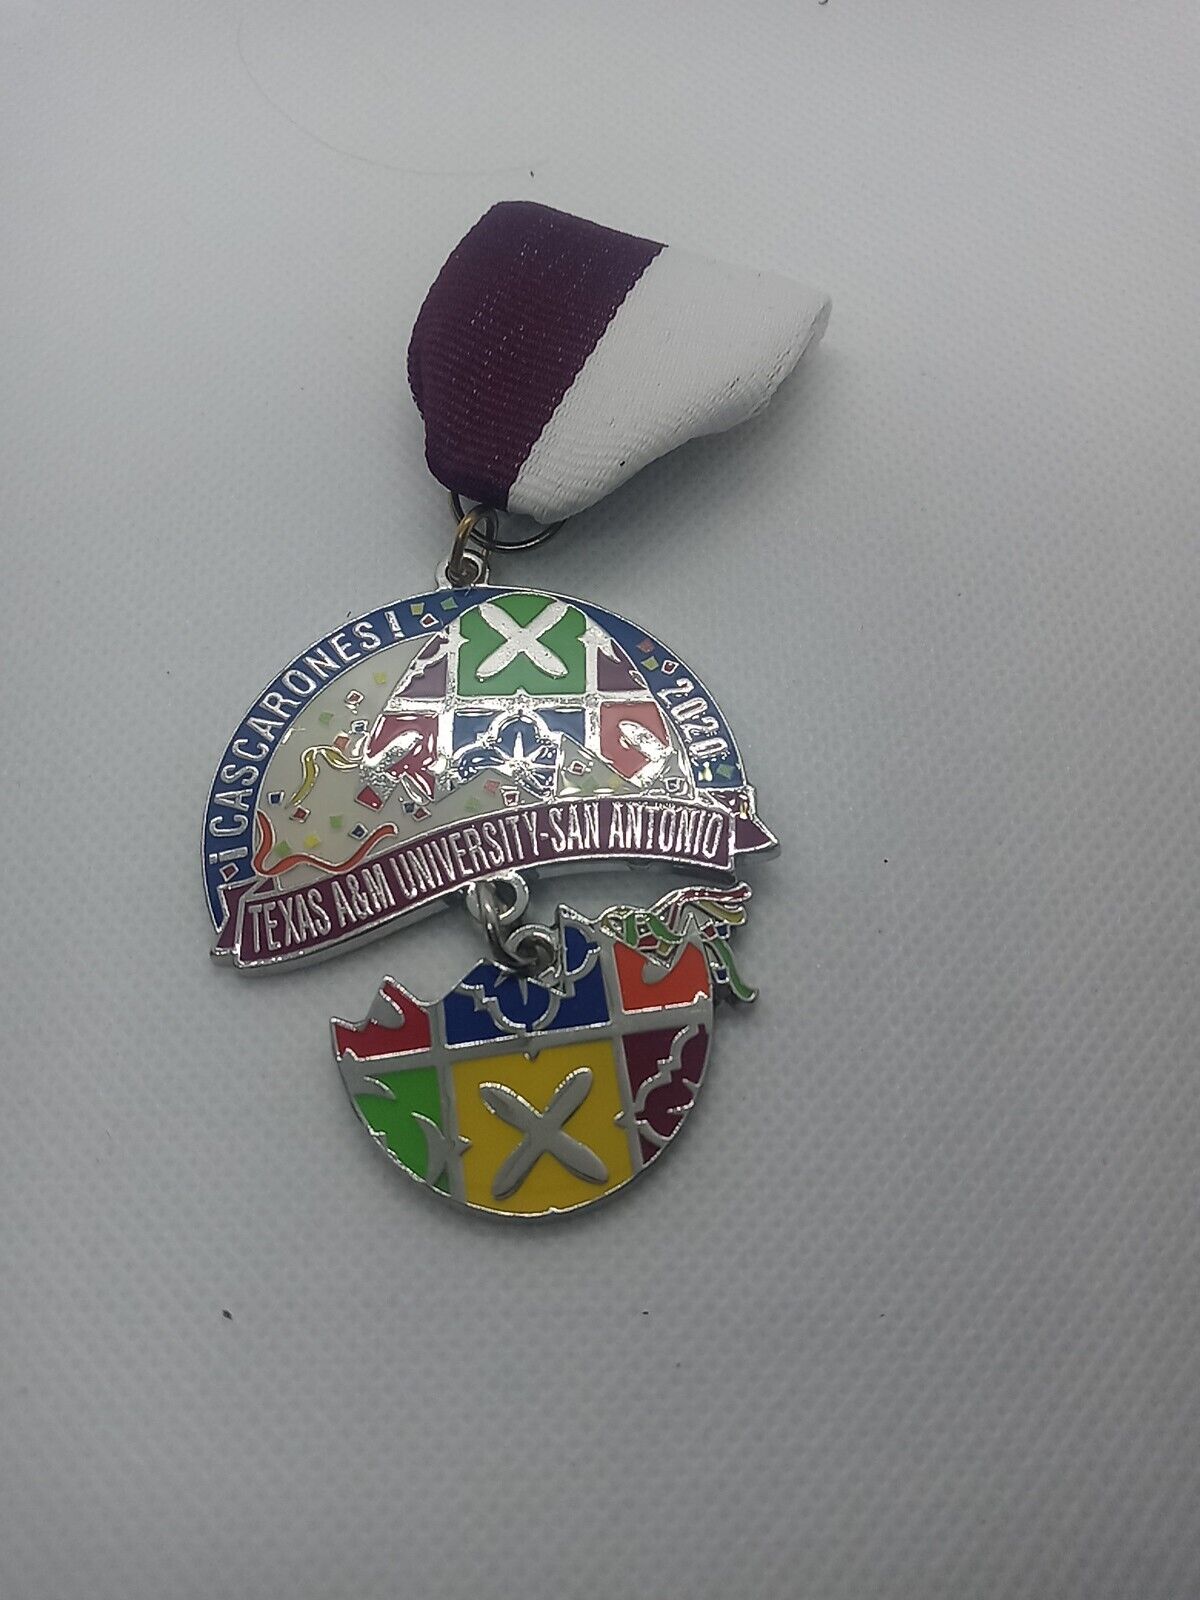 2020 Texas A&M  Fiesta Medal San Antonio